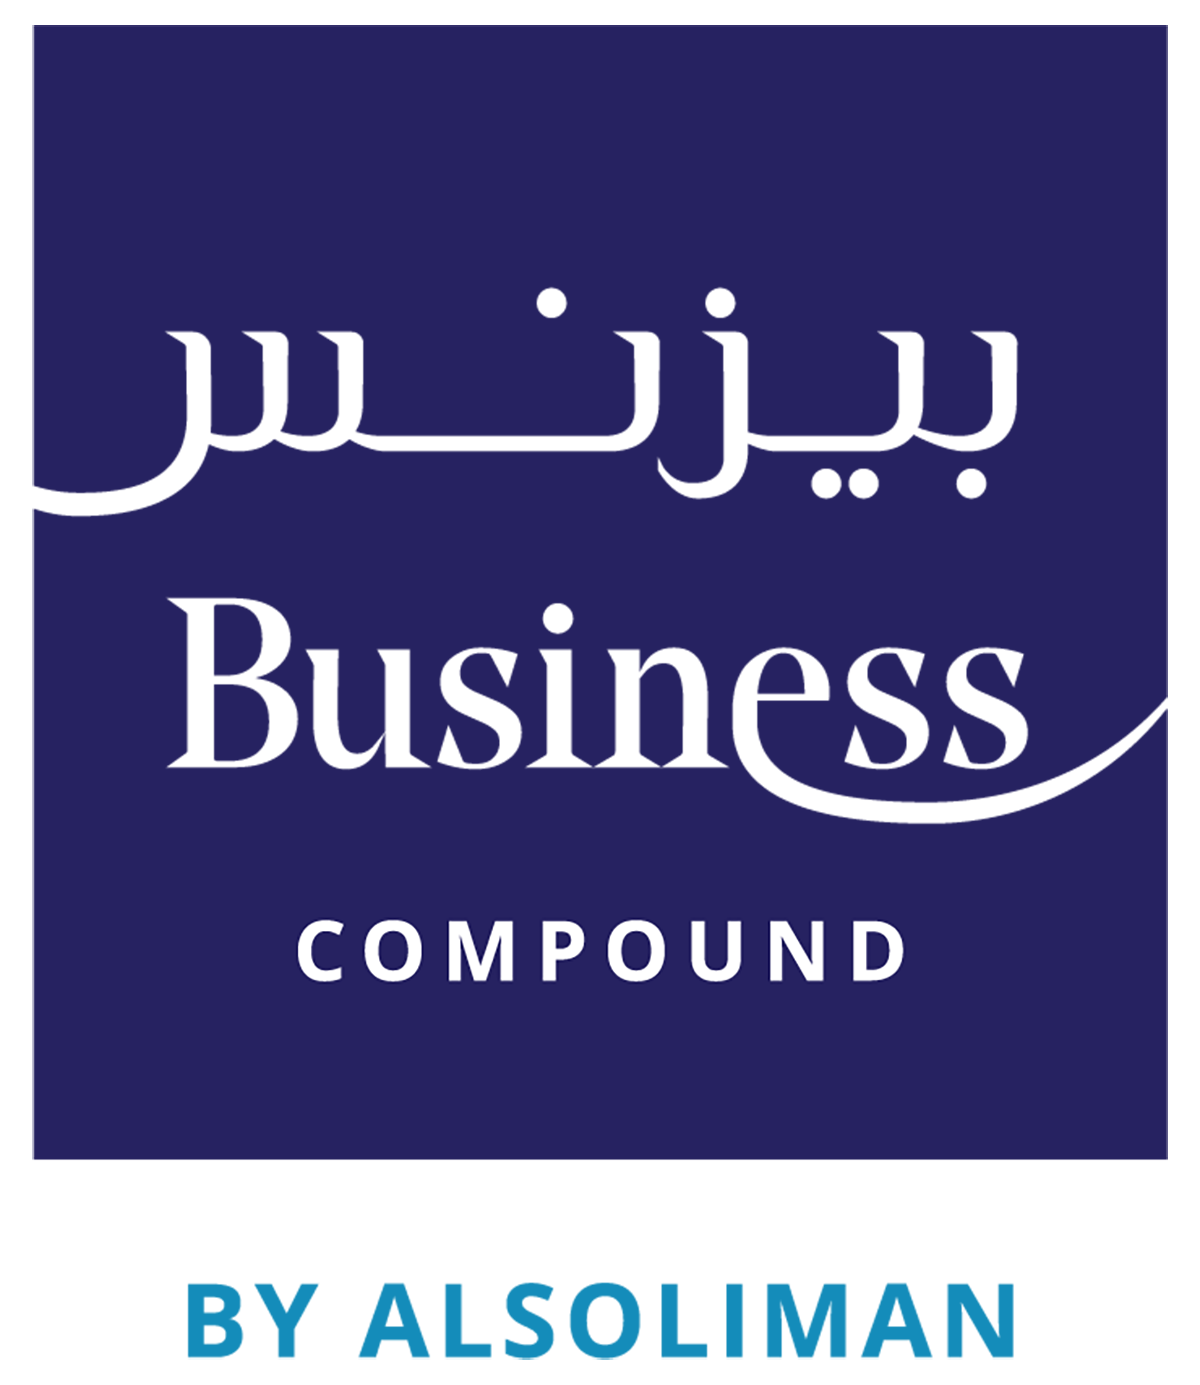 Business Compound